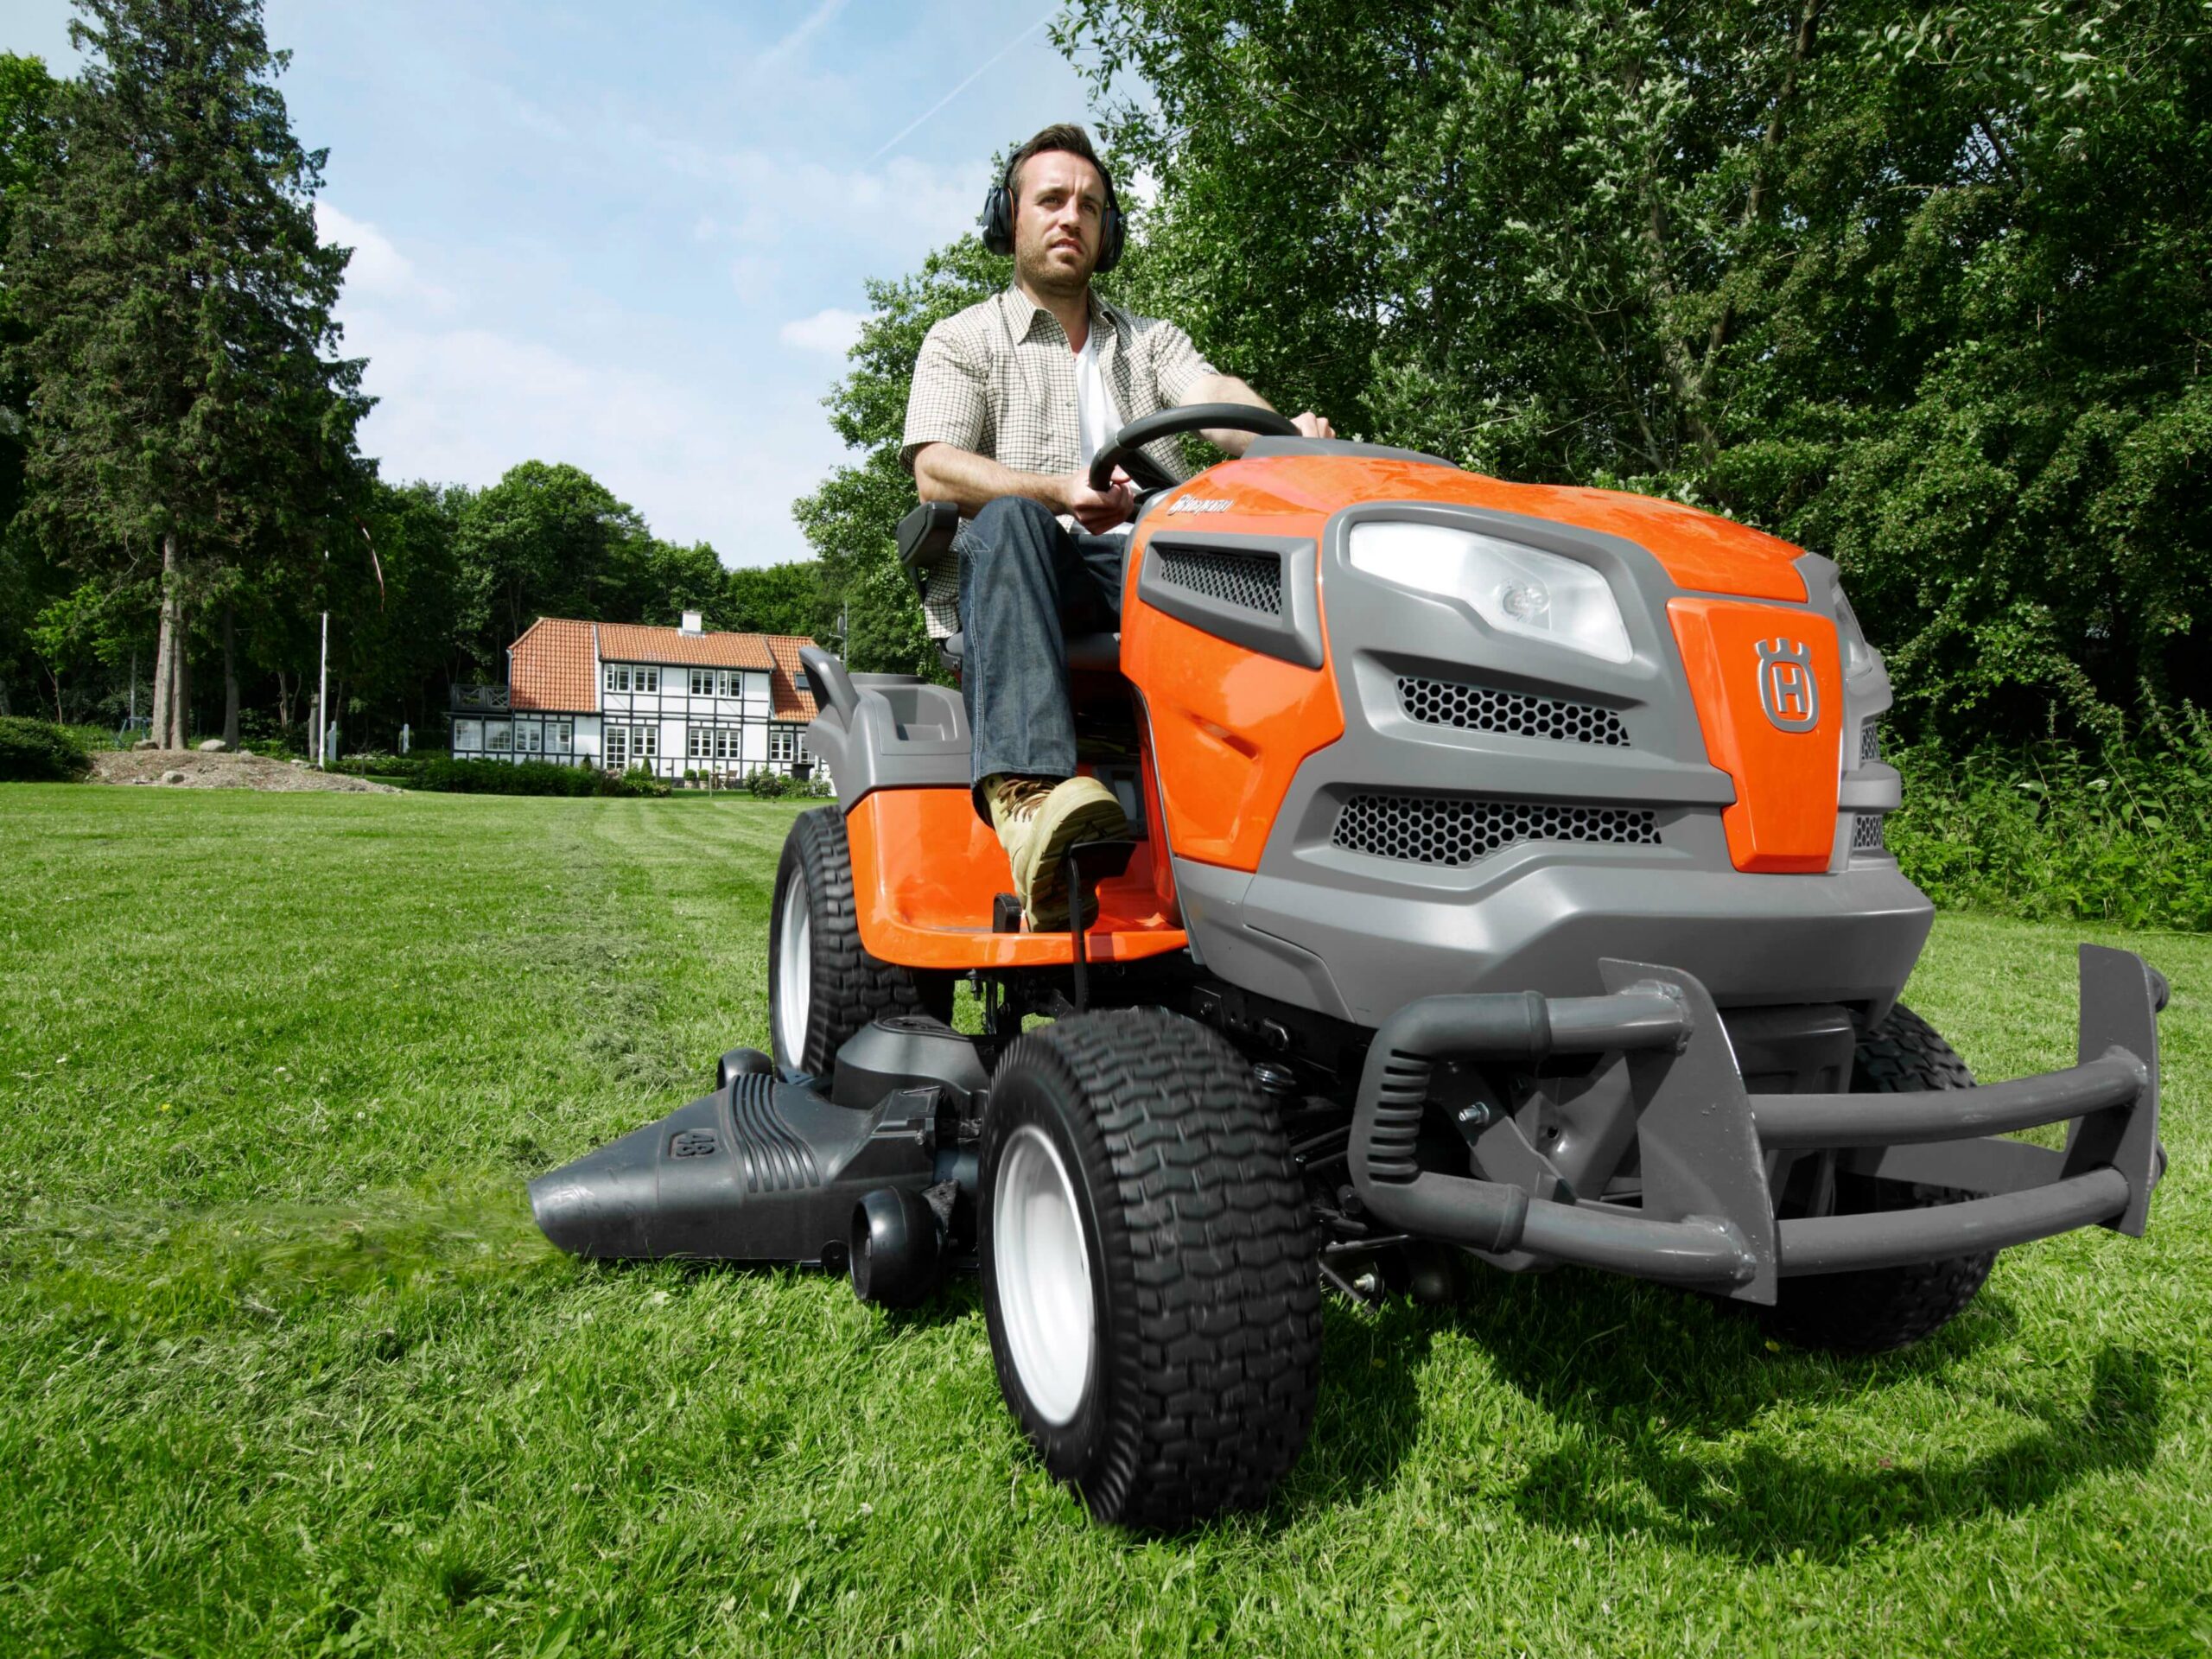 Husqvarna Riding Lawn Mowers Smart Garden Gadgets